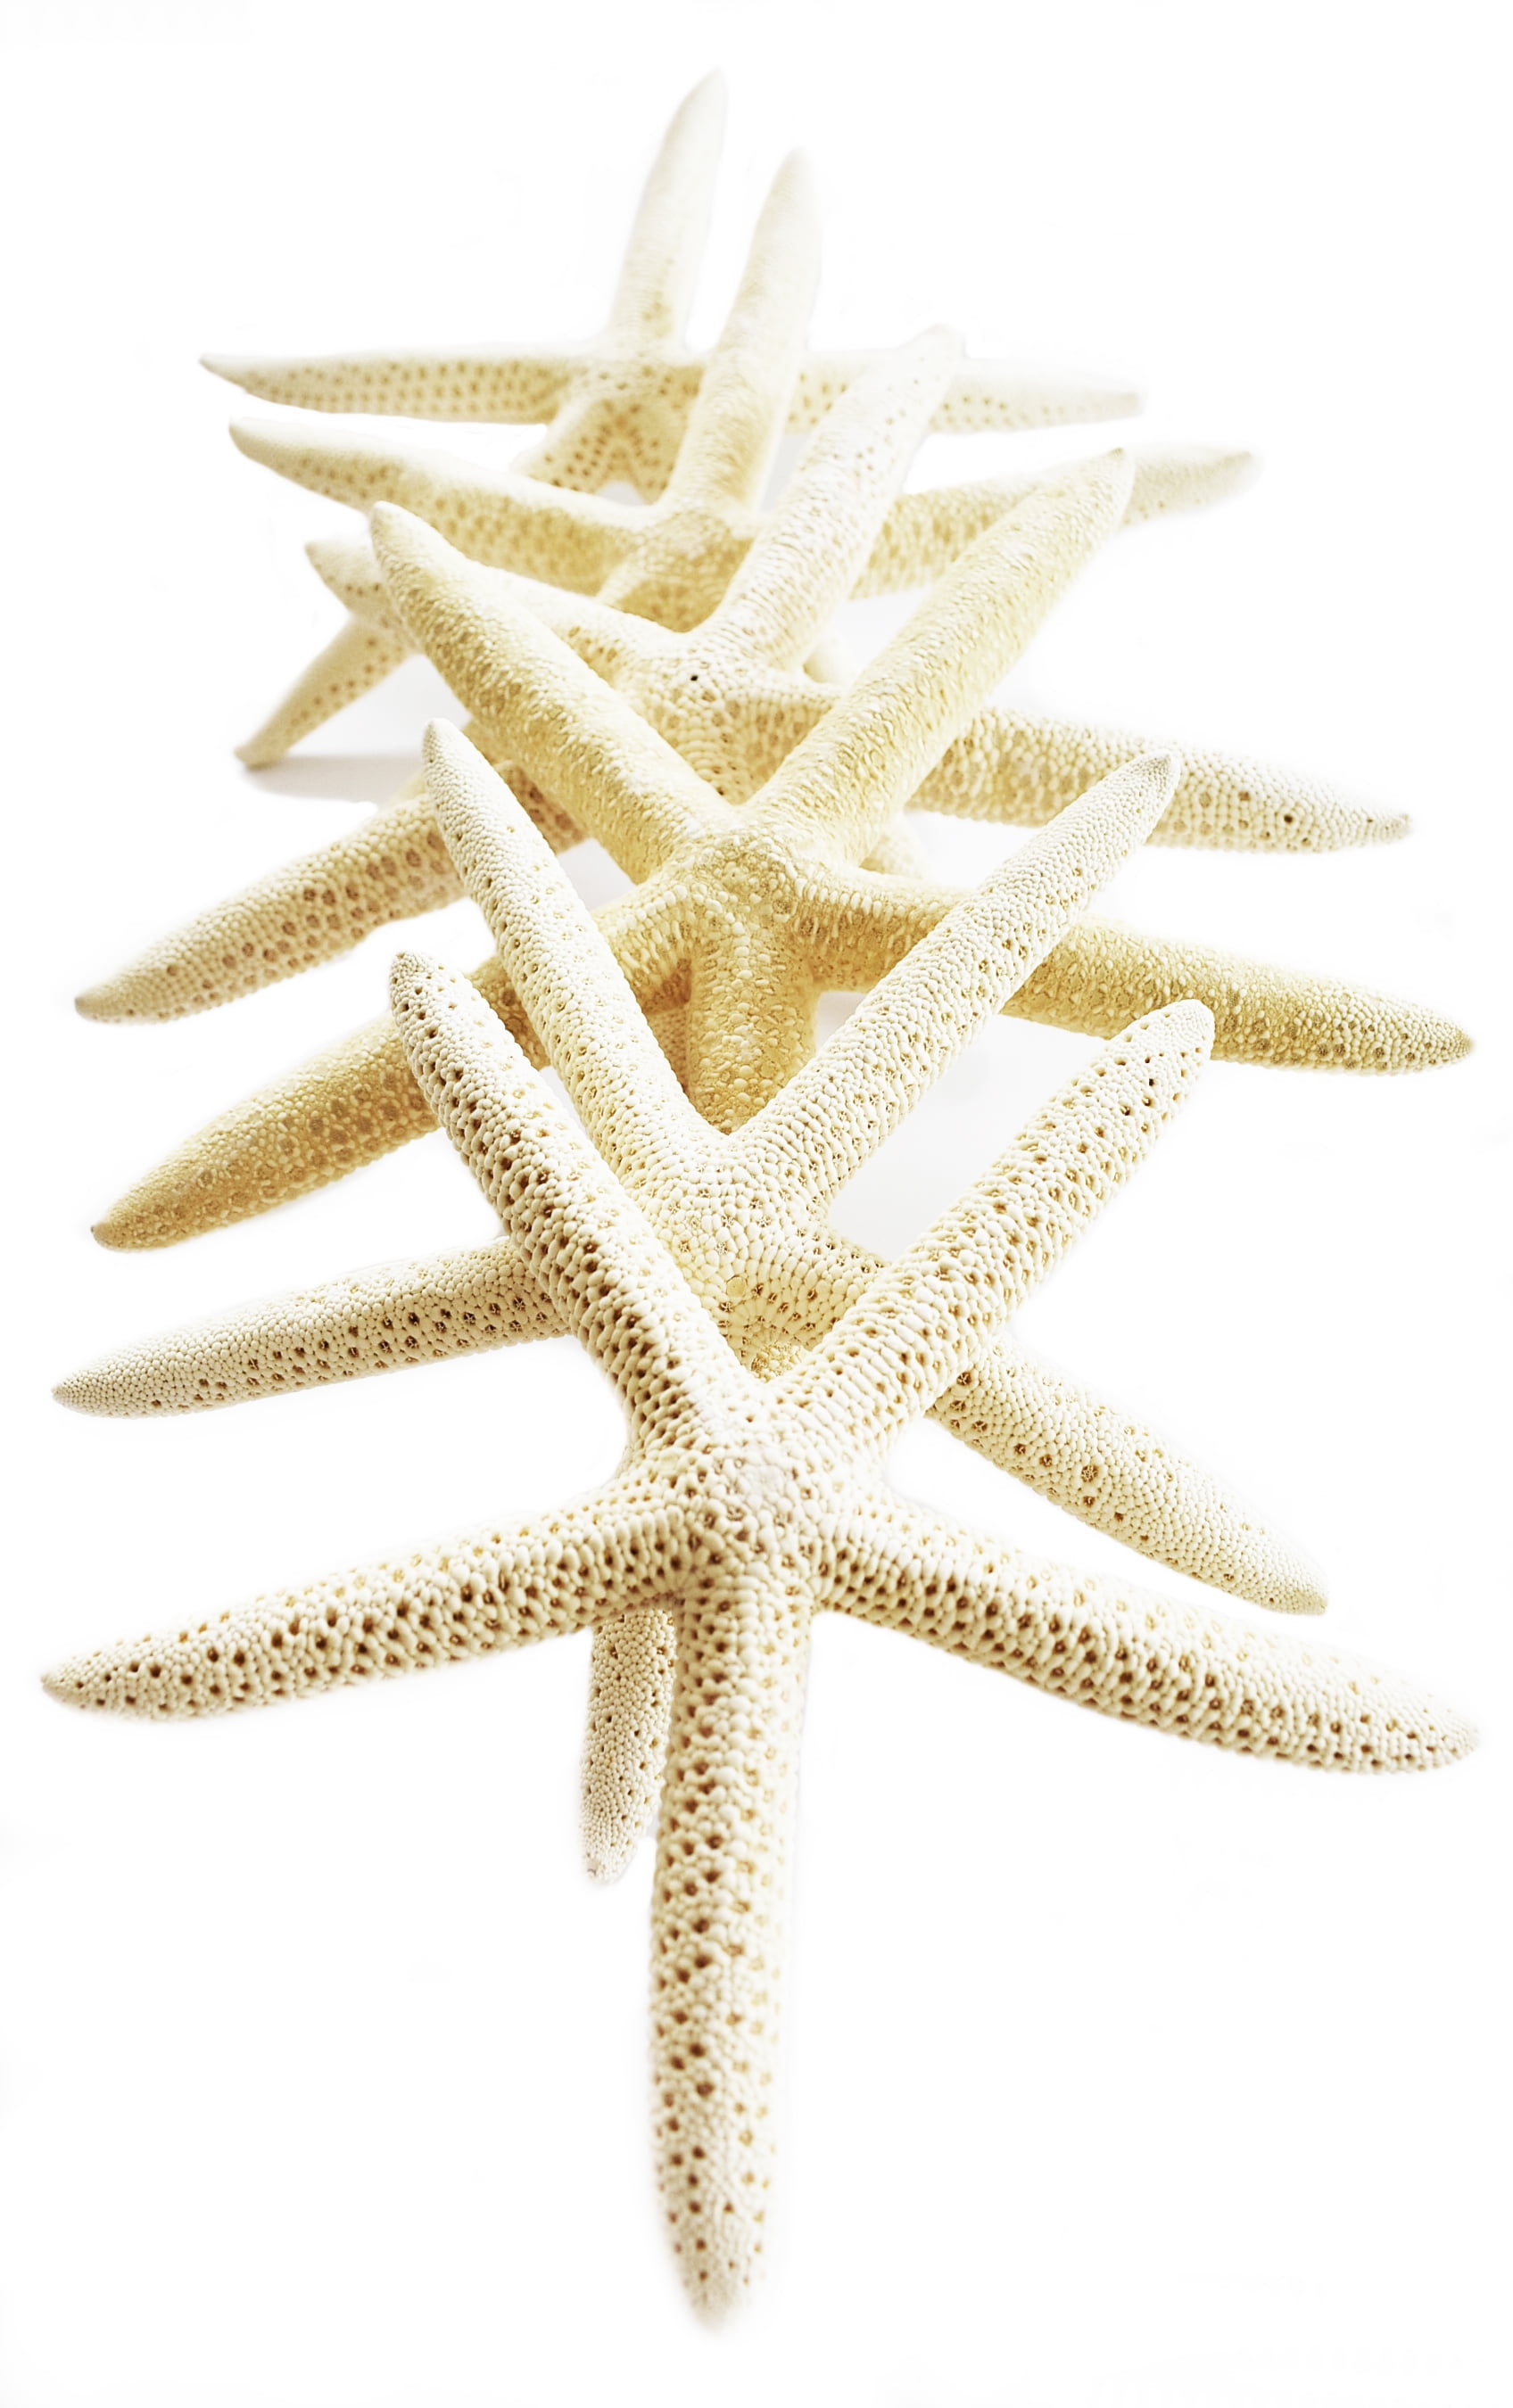 Sugar Starfish Dried Star fish Shell Wedding Craft Decor Item # ssf4-12 12-4" 